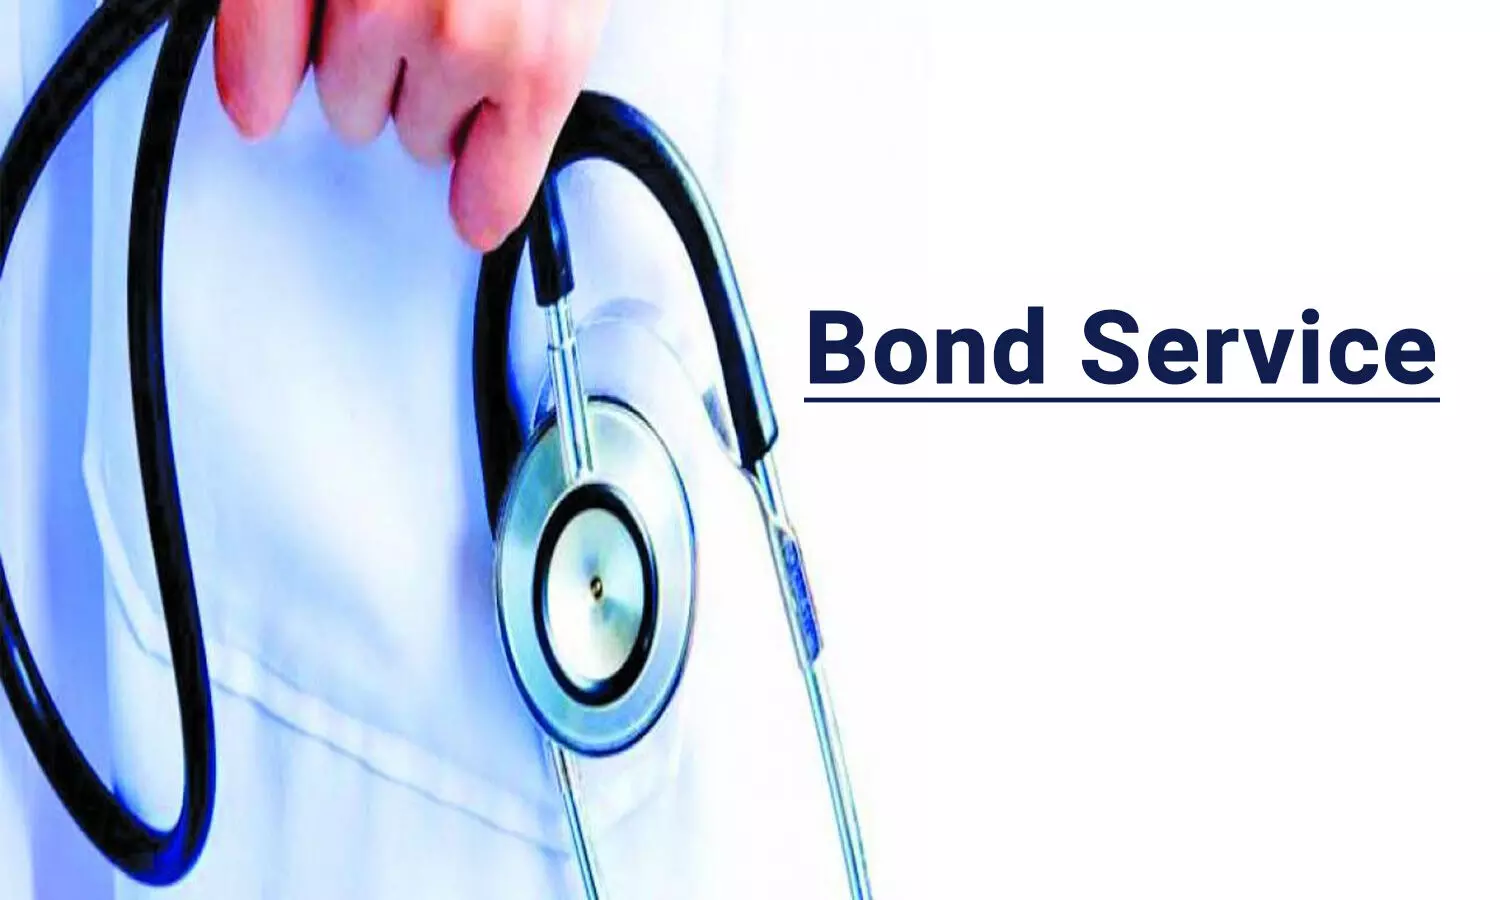 More than 80 MBBS doctors challenge Bond service in MP: SC junks plea